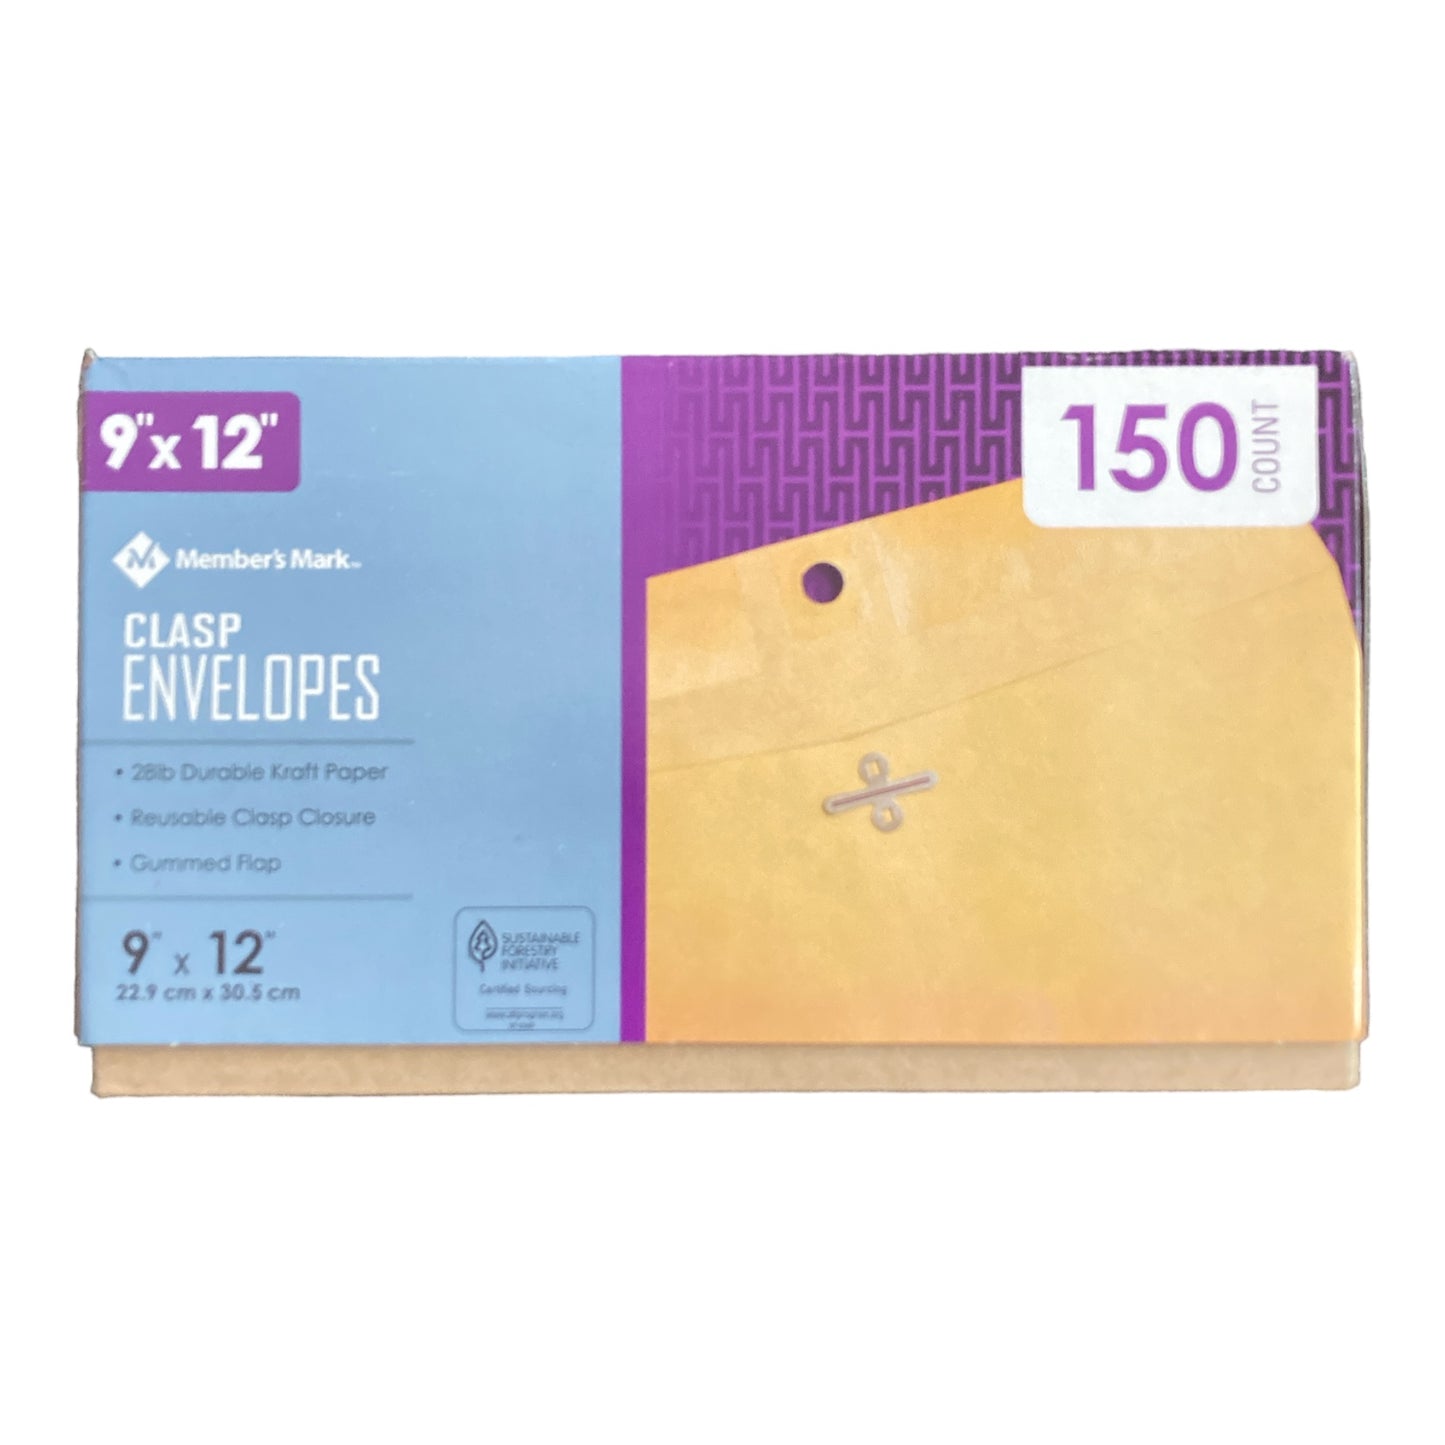 Member's Mark 28lb Durable Kraft Paper Clasp Envelope 9" x 12" (150 ct.)